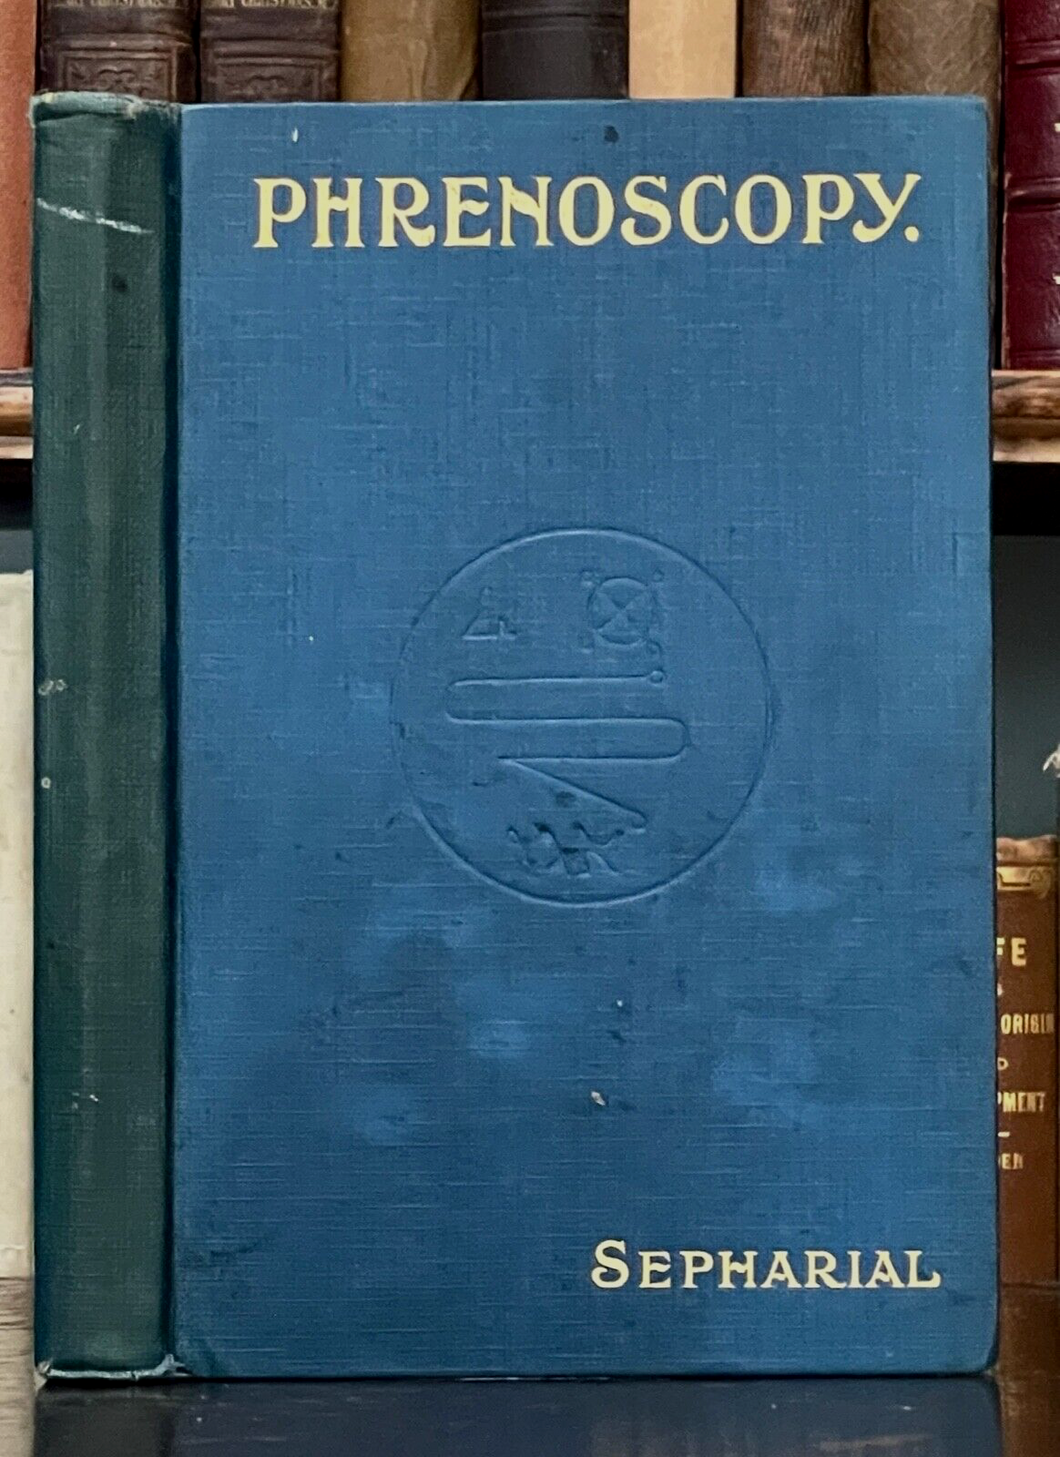 PHRENOSCOPY: SYSTEM OF ASTRO PHRENOLOGY - Sepharial, 1914 - ASTROLOGY DIVINATION